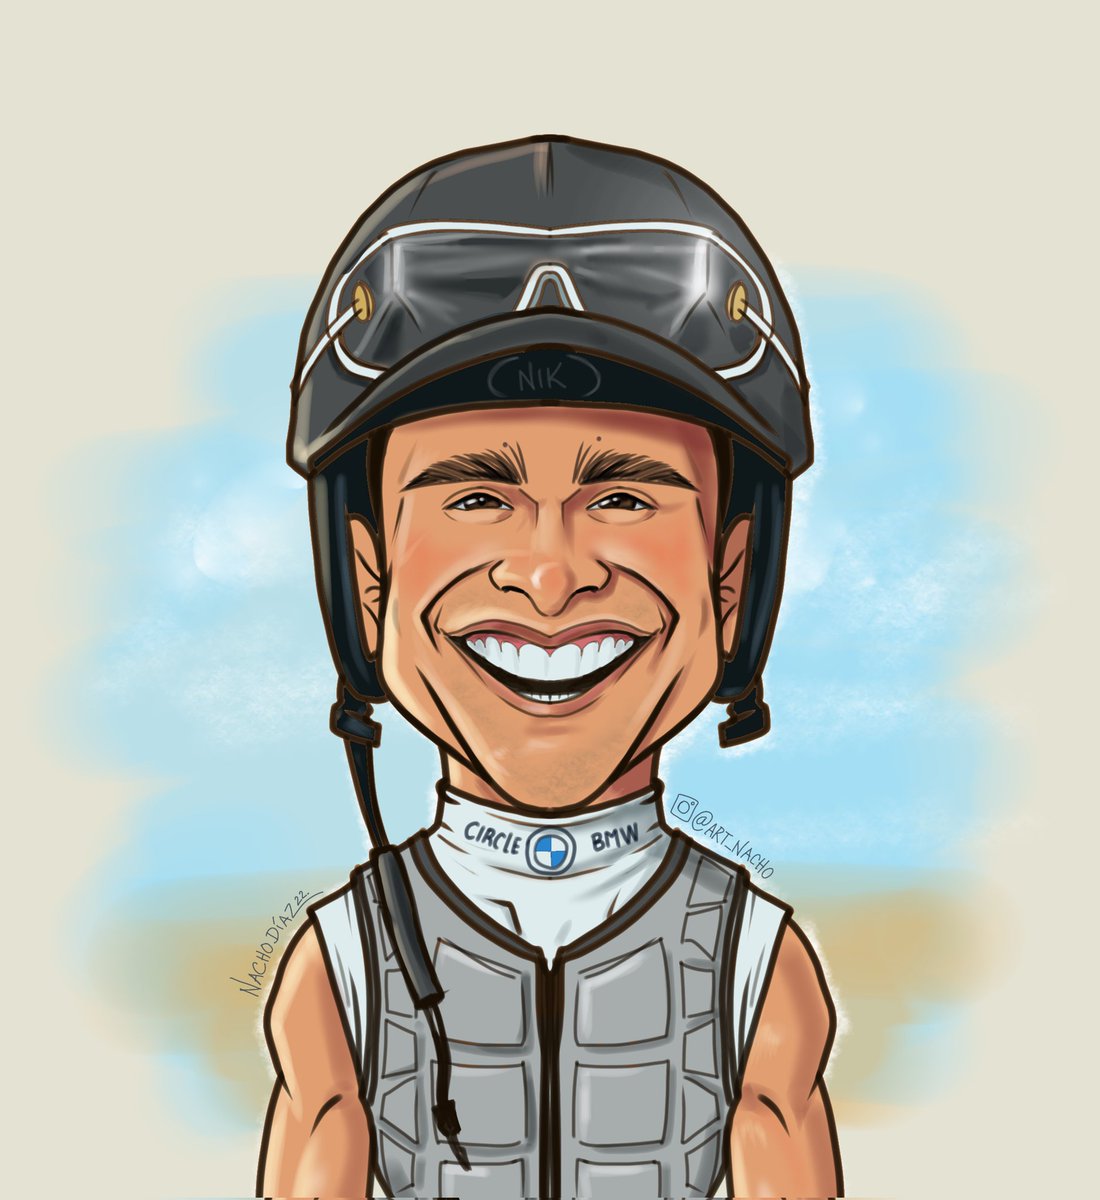 Caricature of the talented jockey Nik Juarez 🐎🇺🇸🏆 @NikJuarez

#NikJuarez #jockeys #ridehorses #fusta #whip #caballodecarreras #thoroughbred #Turf #Hipismo #pimlico #marylandjockeyclub #gulfstreamPark #racetrack #racehorses #horseraces #art #caricaturas #drawing #painting